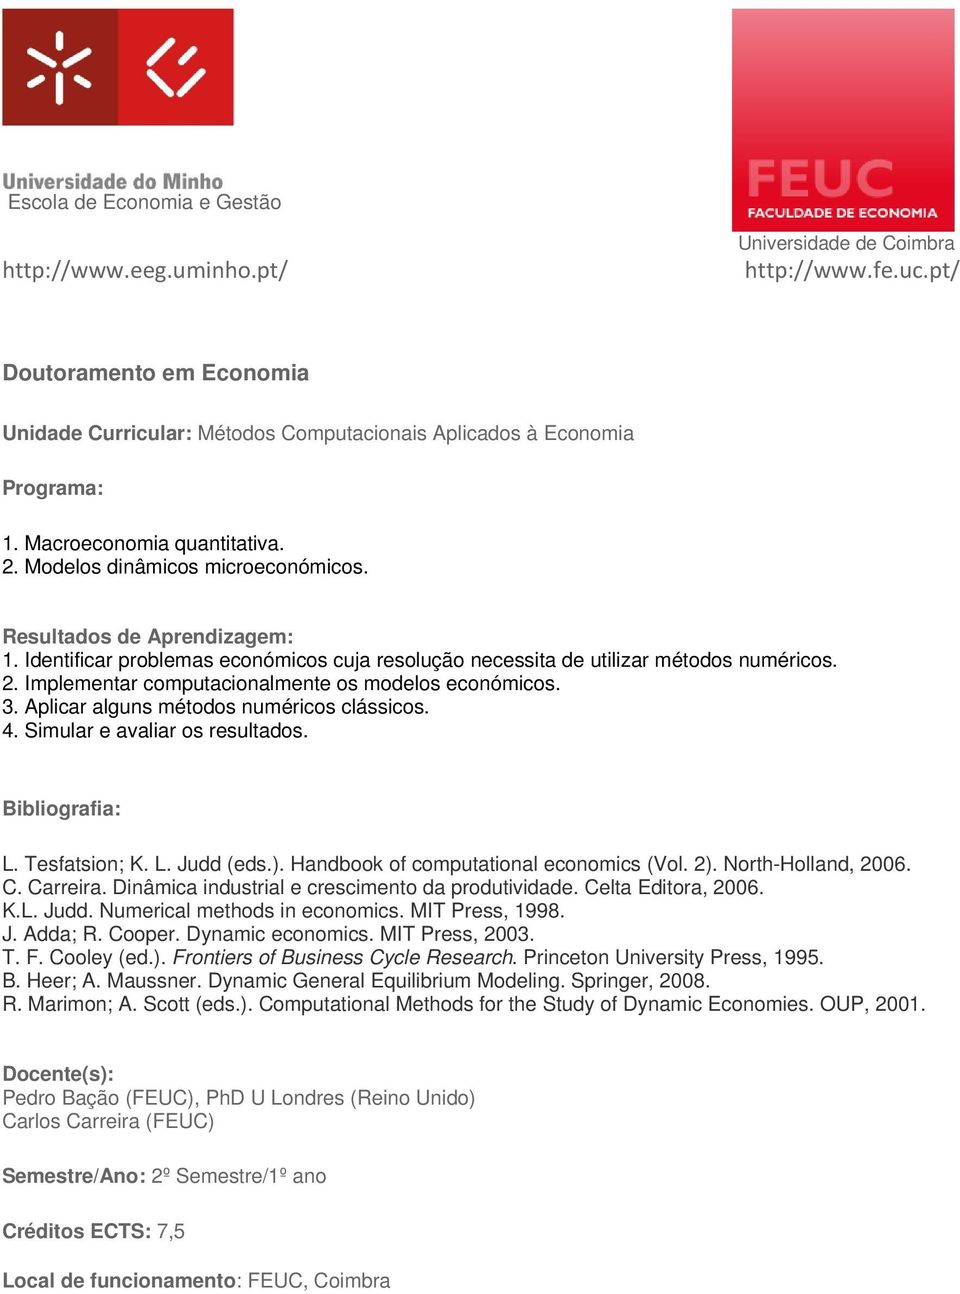 Handbook of computational economics (Vol. 2). North-Holland, 2006. C. Carreira. Dinâmica industrial e crescimento da produtividade. Celta Editora, 2006. K.L. Judd. Numerical methods in economics.